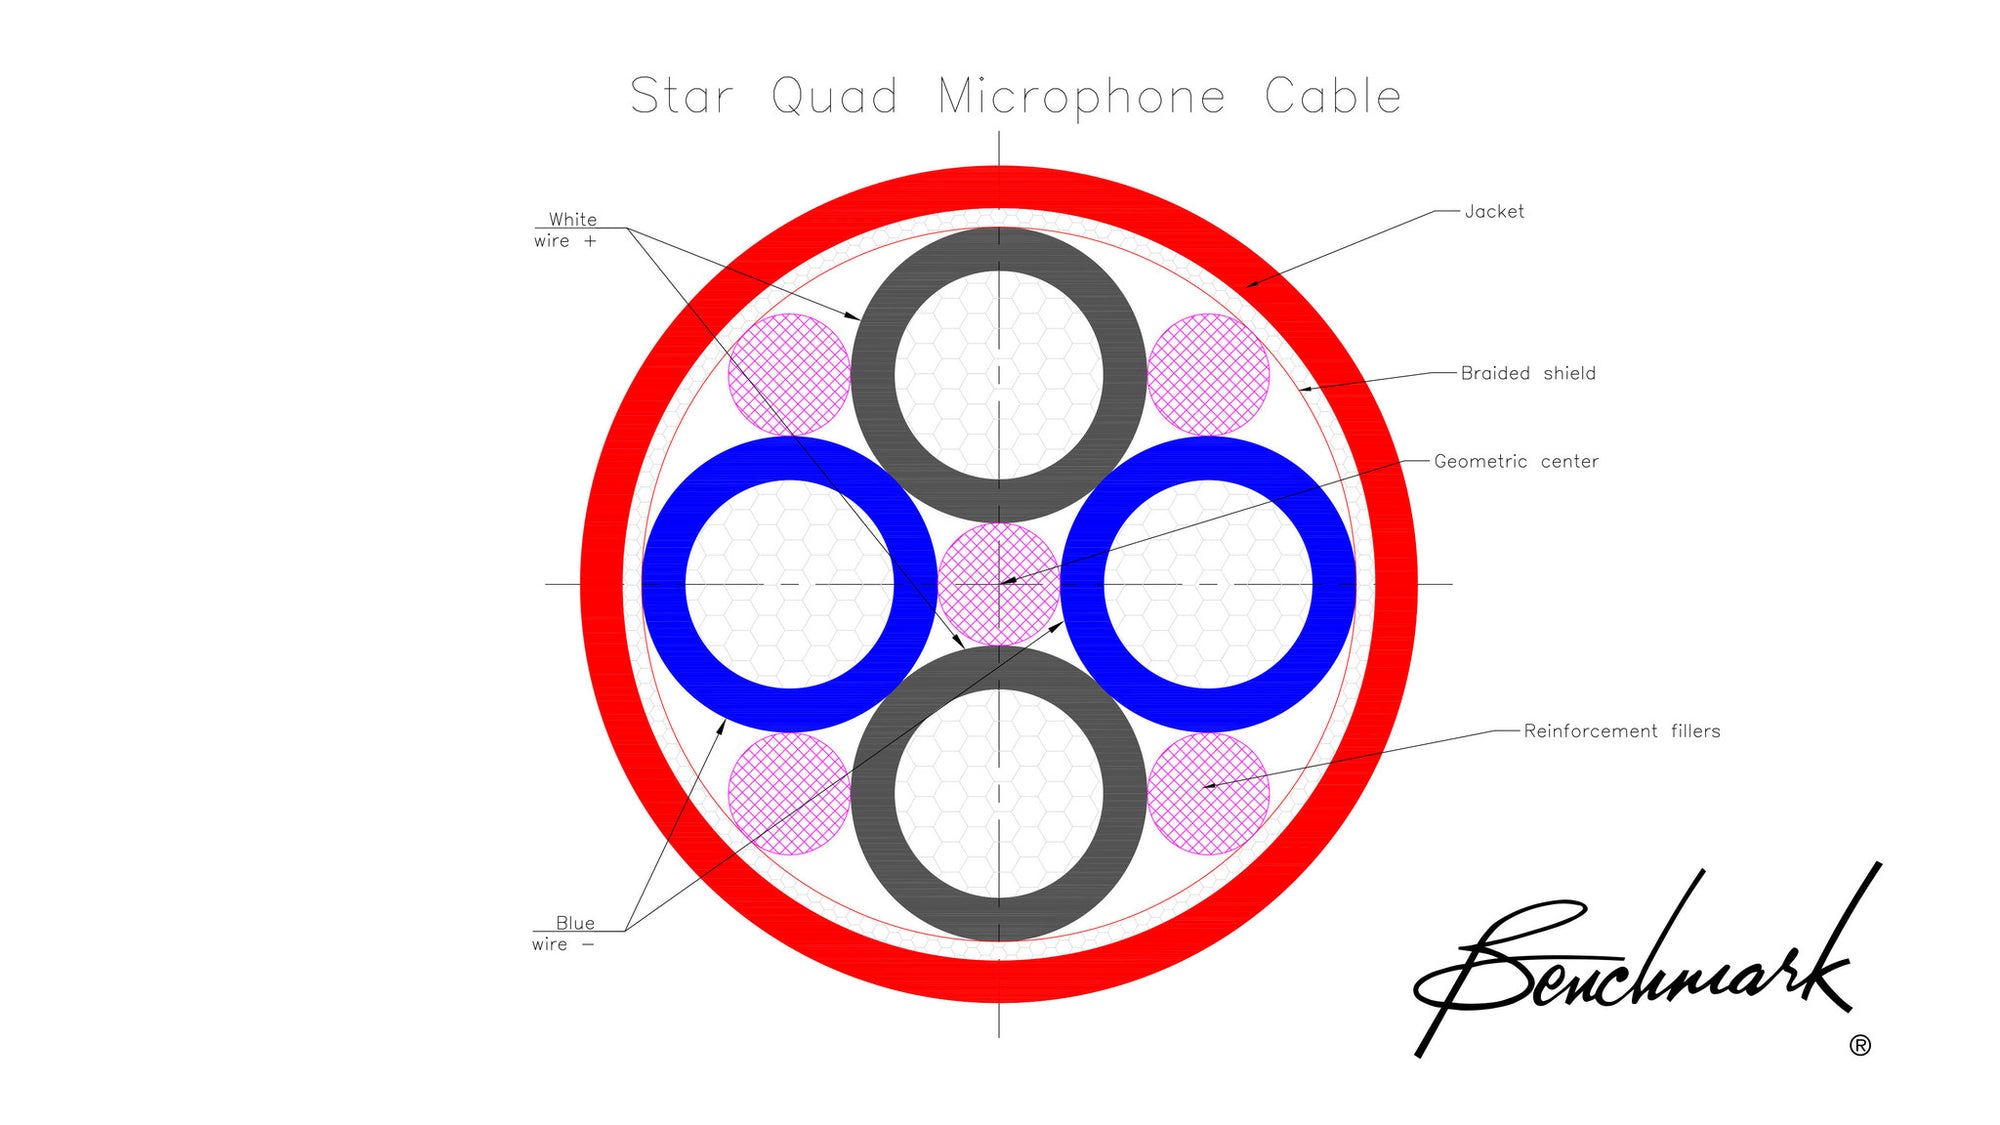 Star Quad Cable - Internal Construction Details